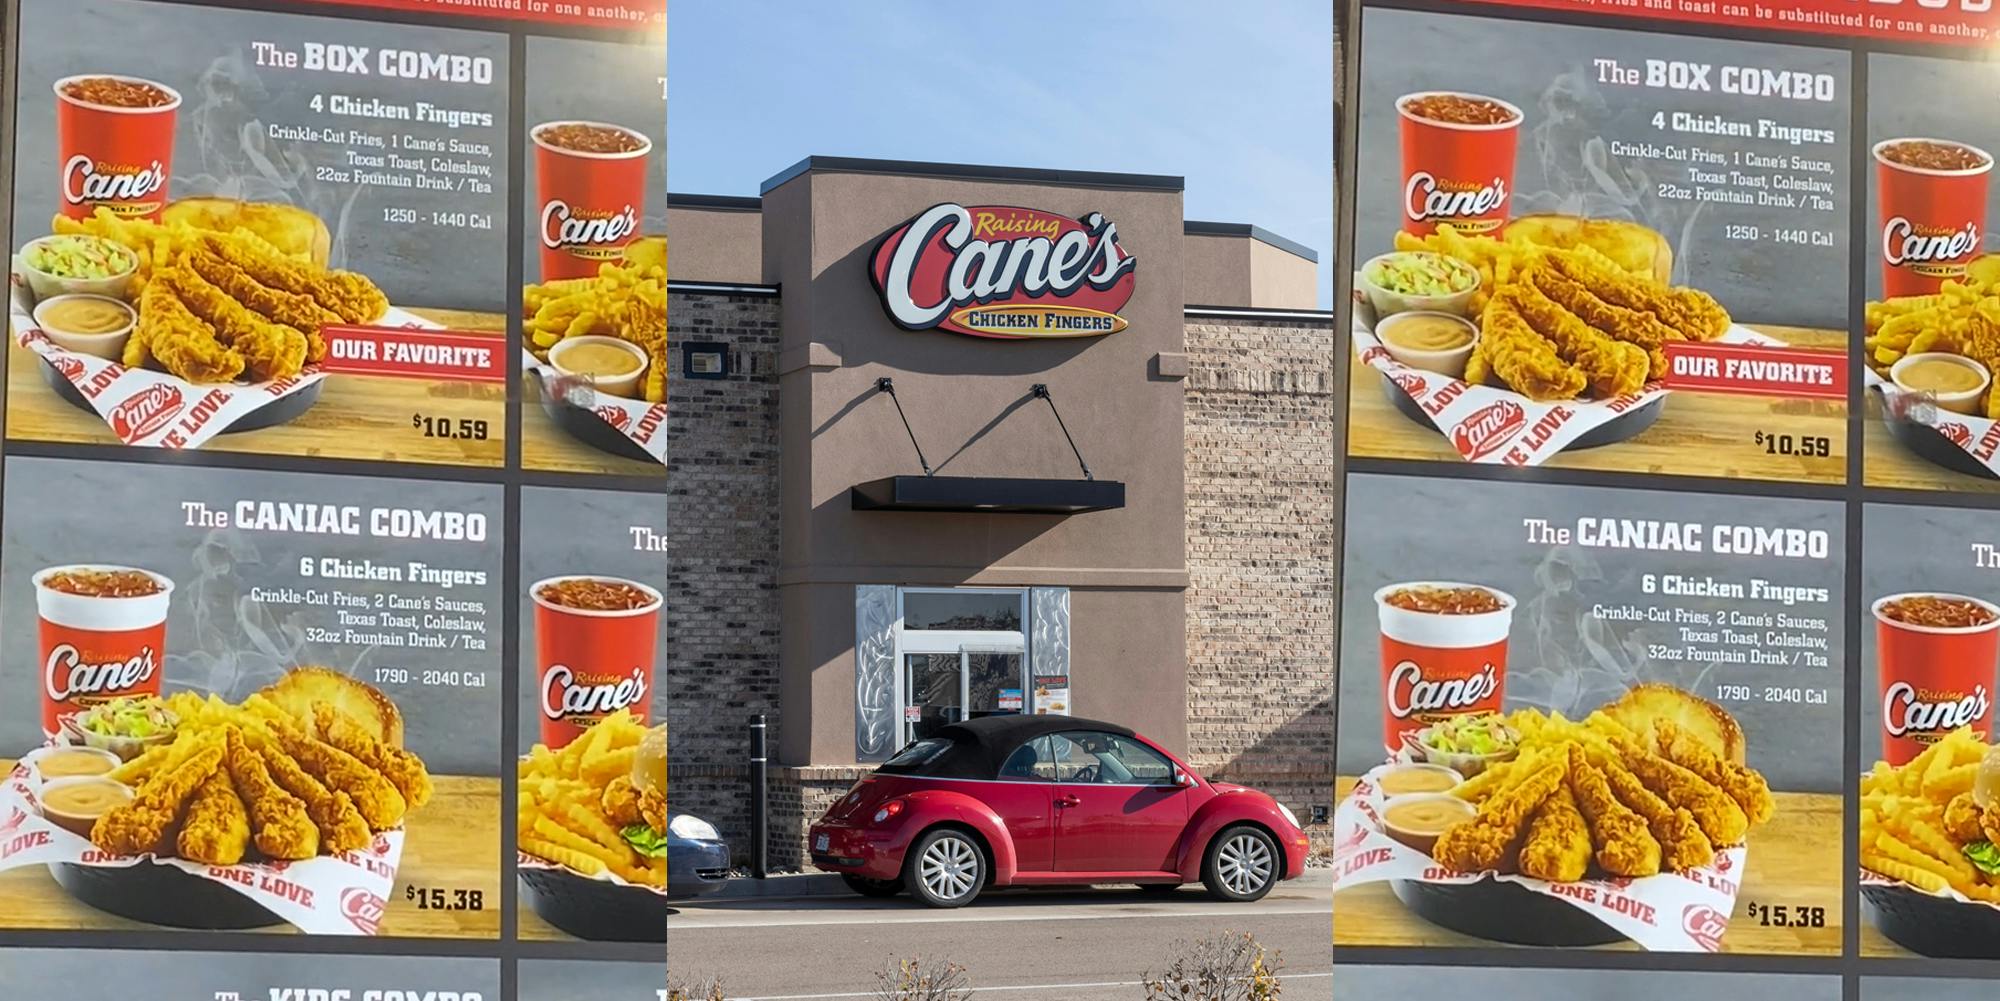 Cane's drive thru menu with "The Caniac Combo" at $15.38 (l) Cane's drive through with sign (c) Cane's drive thru menu with "The Caniac Combo" at $15.38 (r)